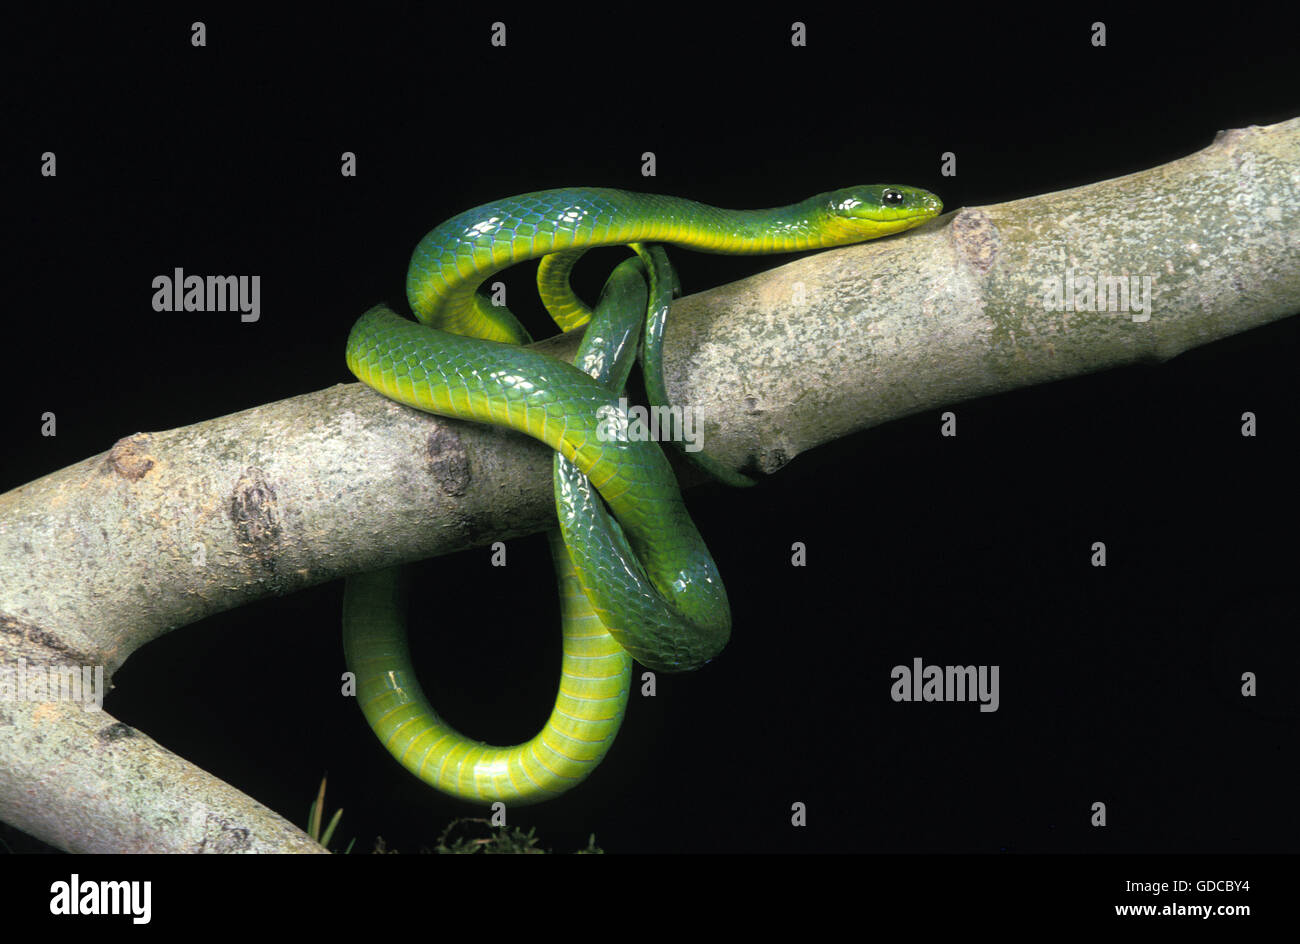 Green Snake, opheodrys major, Adult on Branch against Black Background Stock Photo